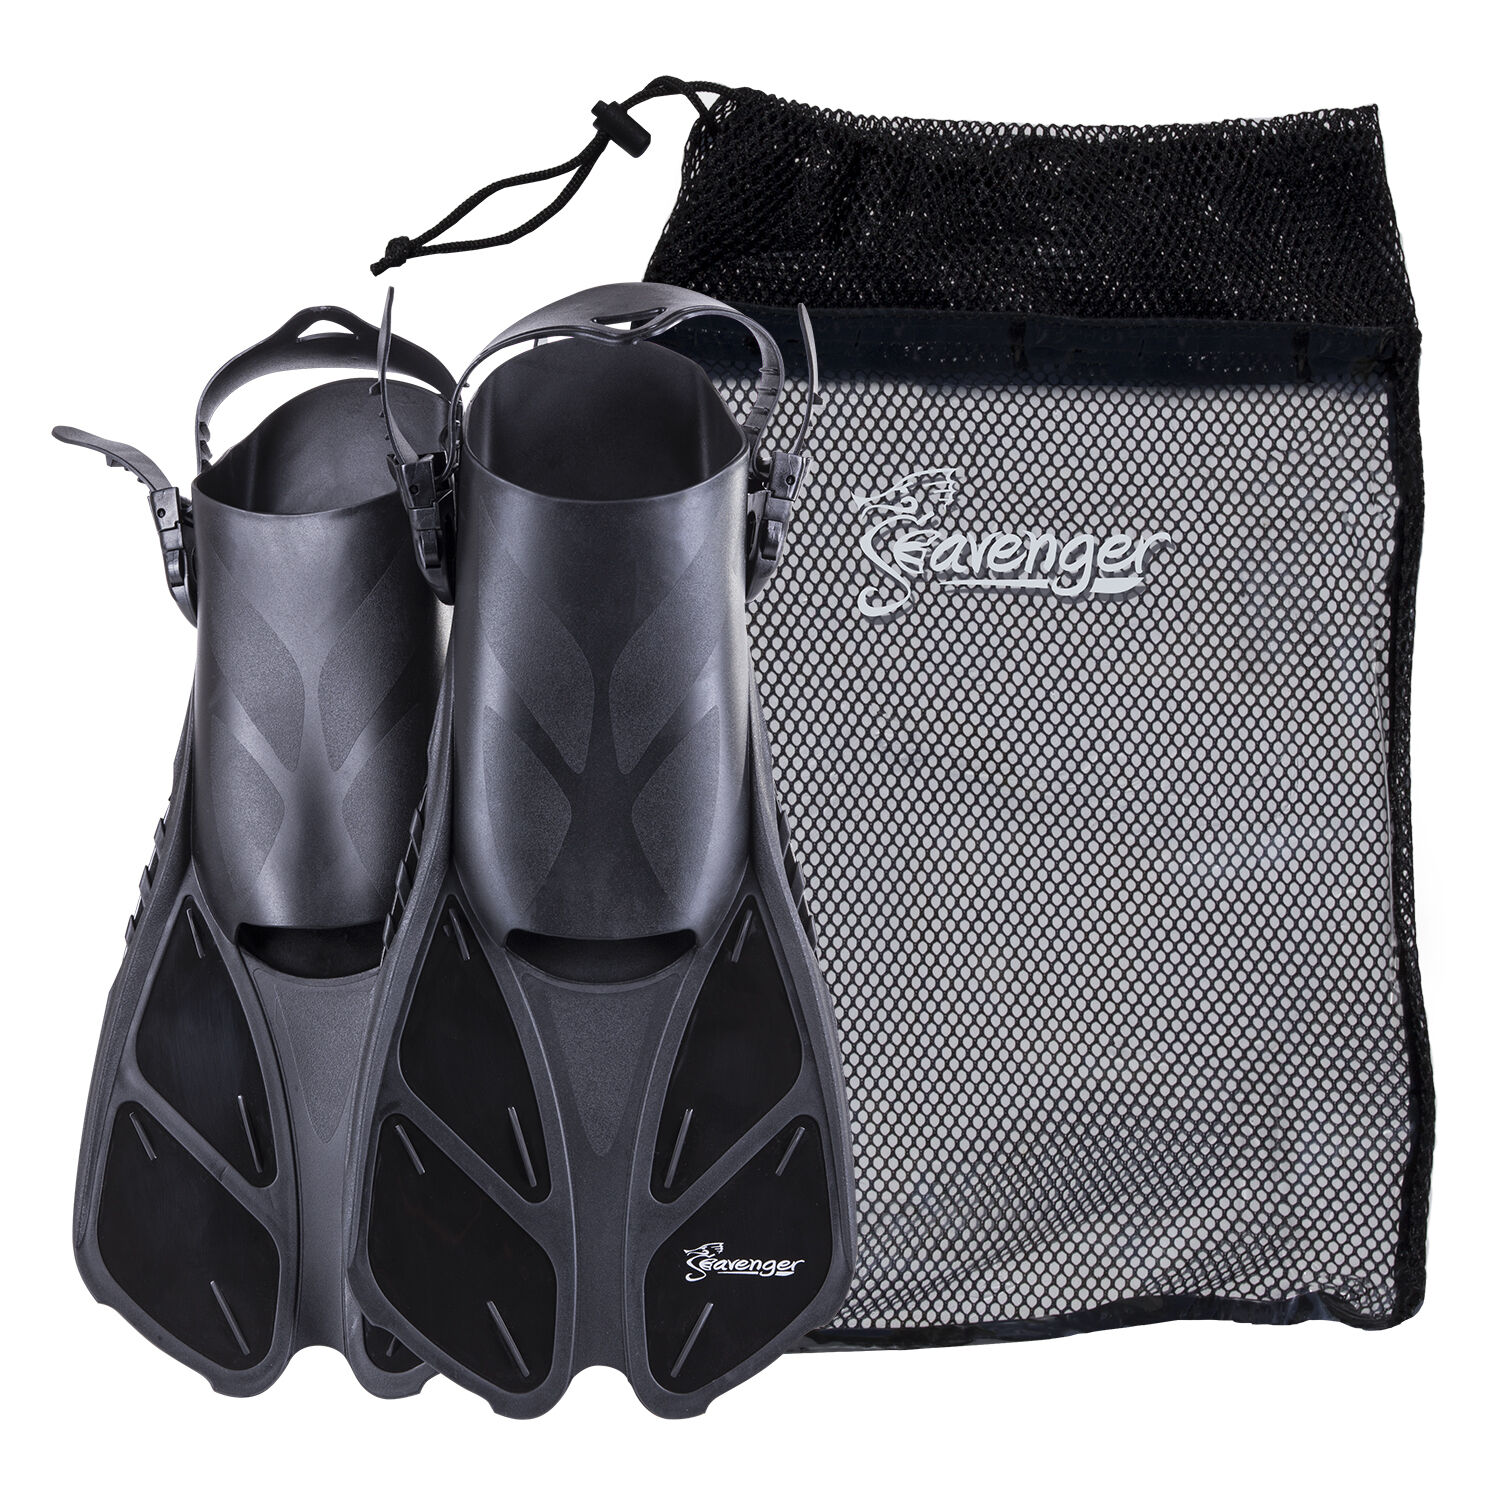 Seavenger Snorkel Swimming Training Fins Mesh Bag Set Combo Adult Unisex Kids